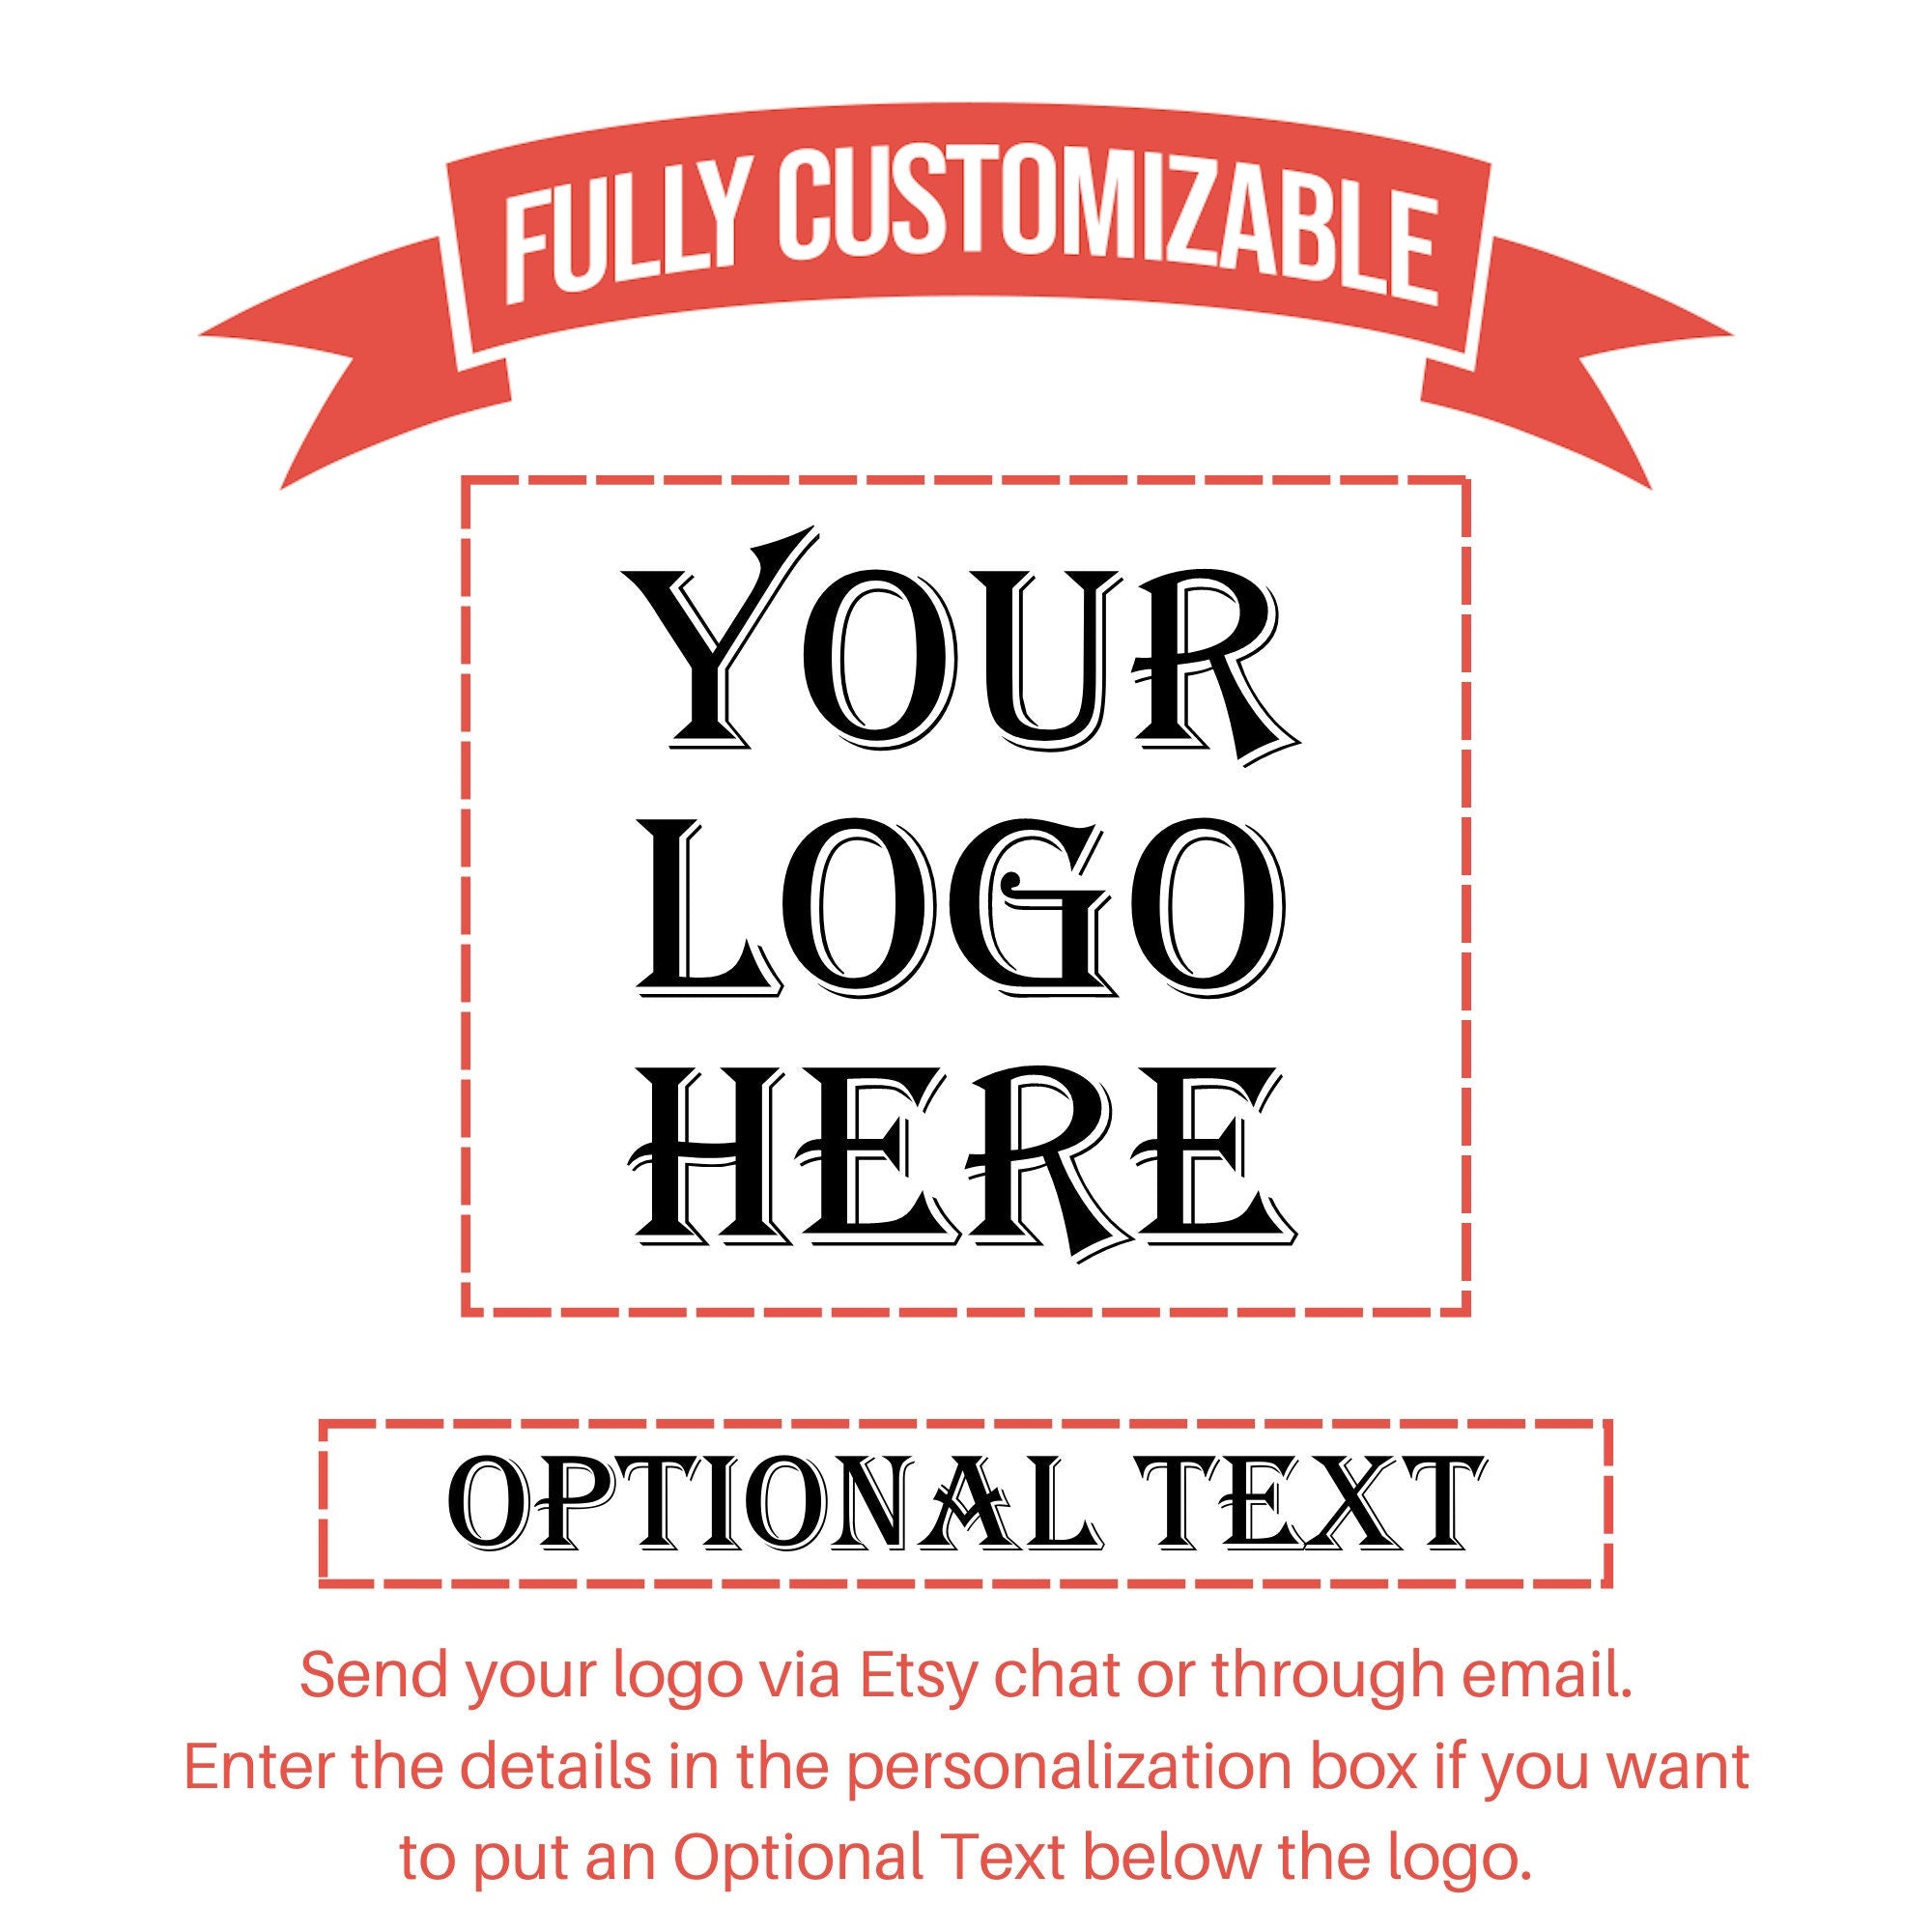 Custom Engraved Logo 20 oz Bulk Tumblers, Corporate Gift Idea Small Bu –  Broquet